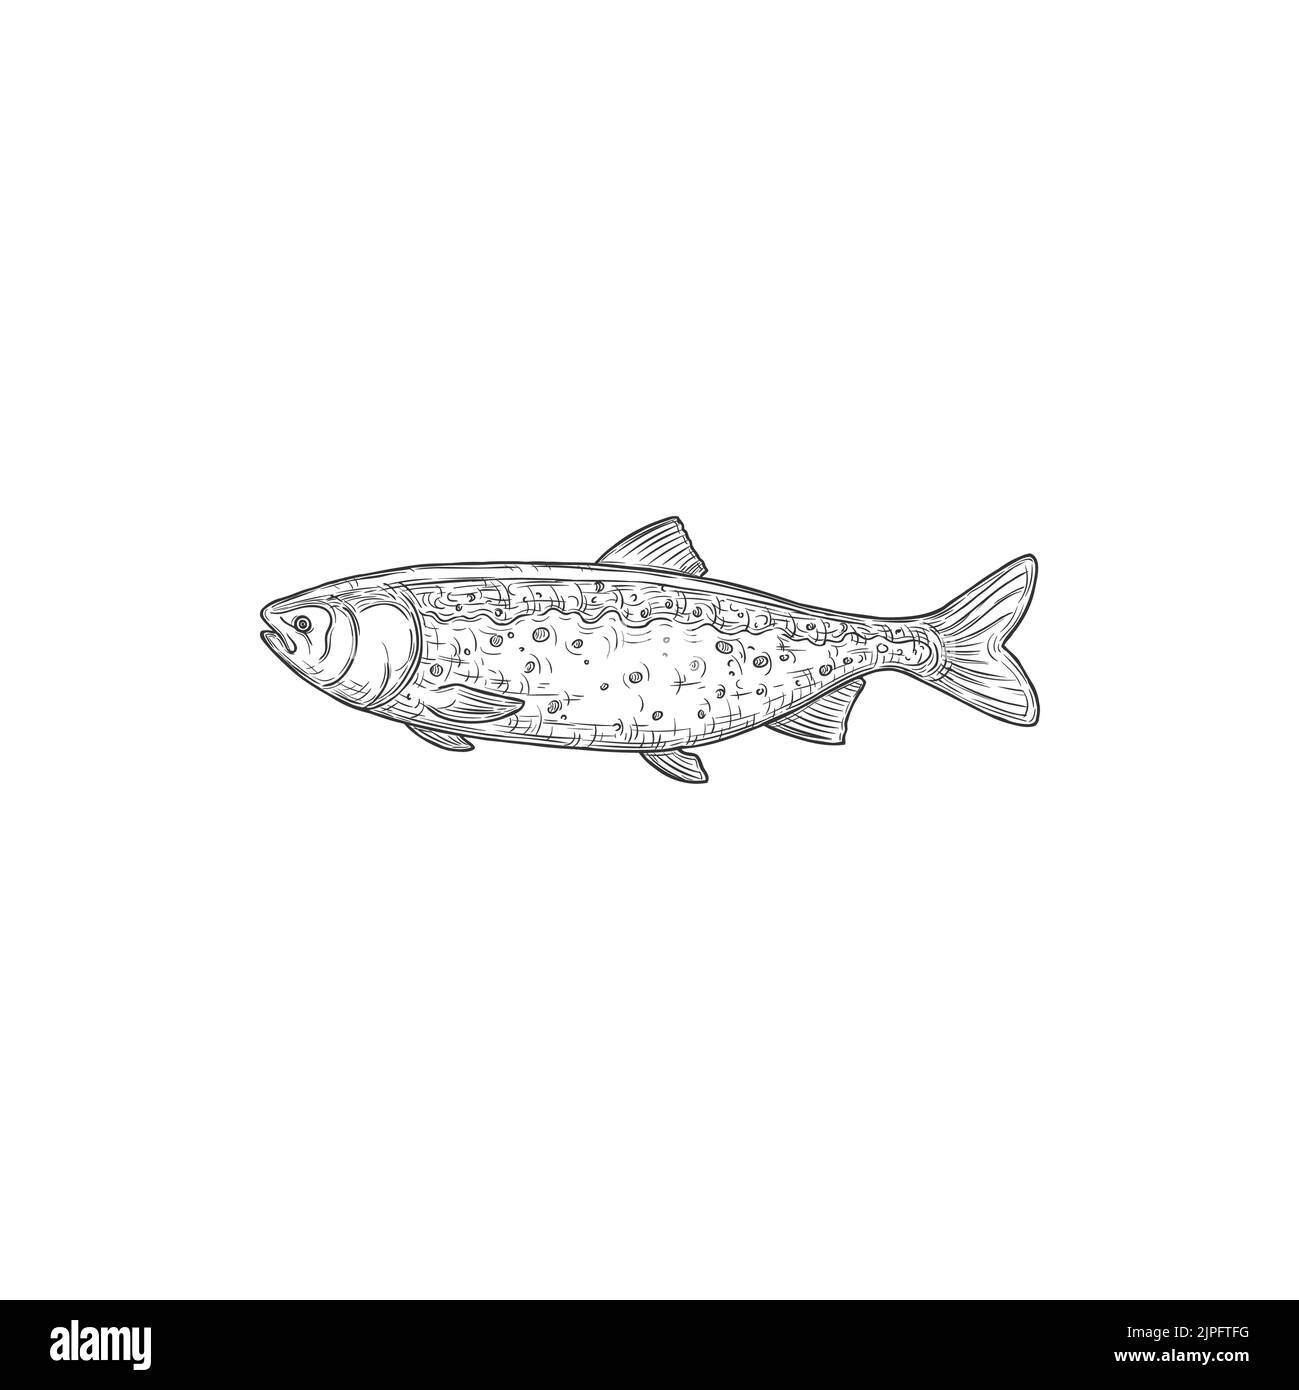 Mackerel bluefish mascot isolated monochrome icon. Vector tuna fish hand drawn fishing sport emblem. Tunnus atlantic sardine, horse mackerel with flounders. Scombridae saltwater fish, aquatic animal Stock Vector